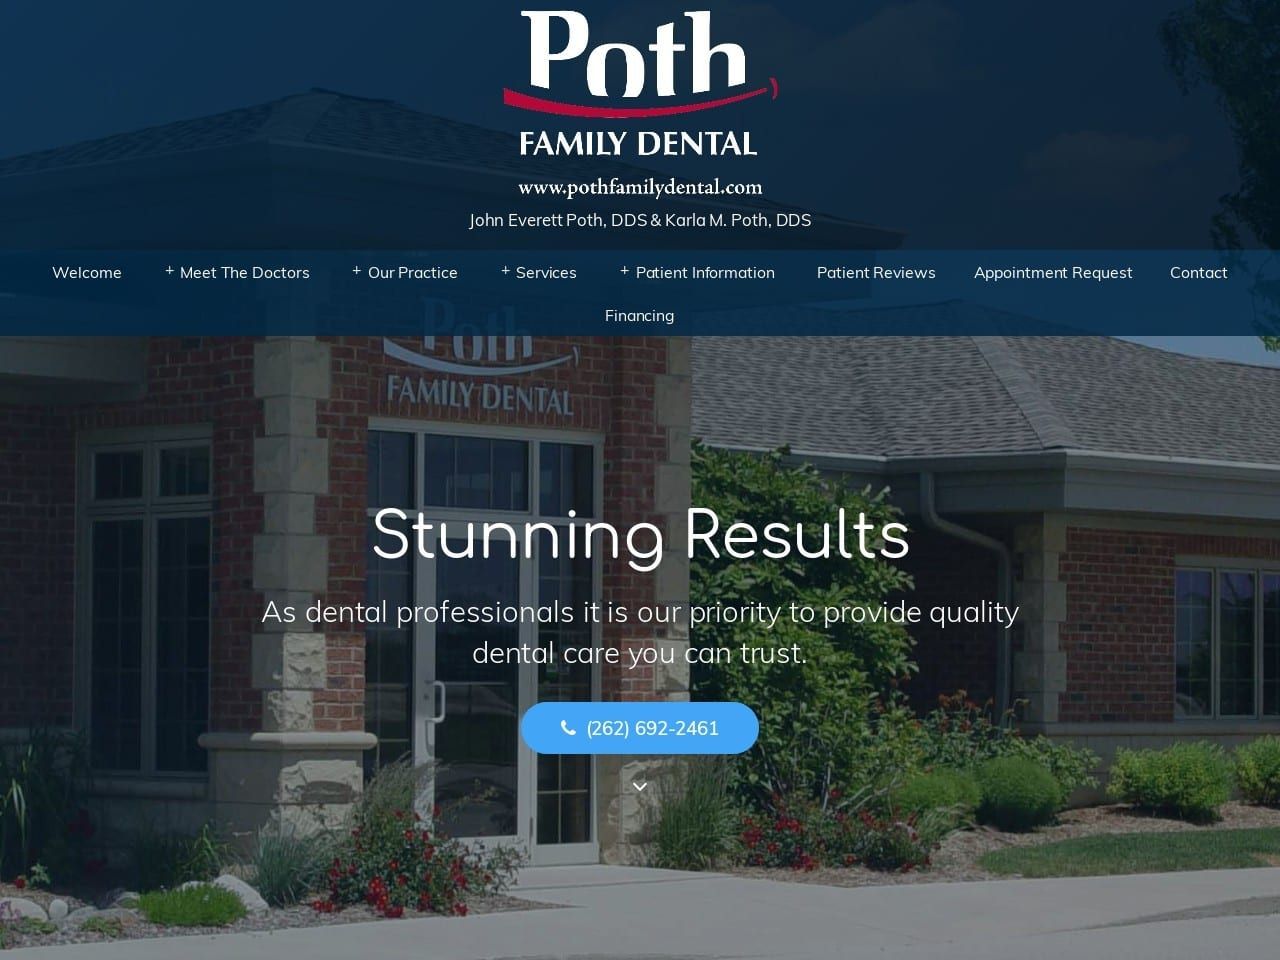 Poth Family Dental Website Screenshot from pothfamilydental.com